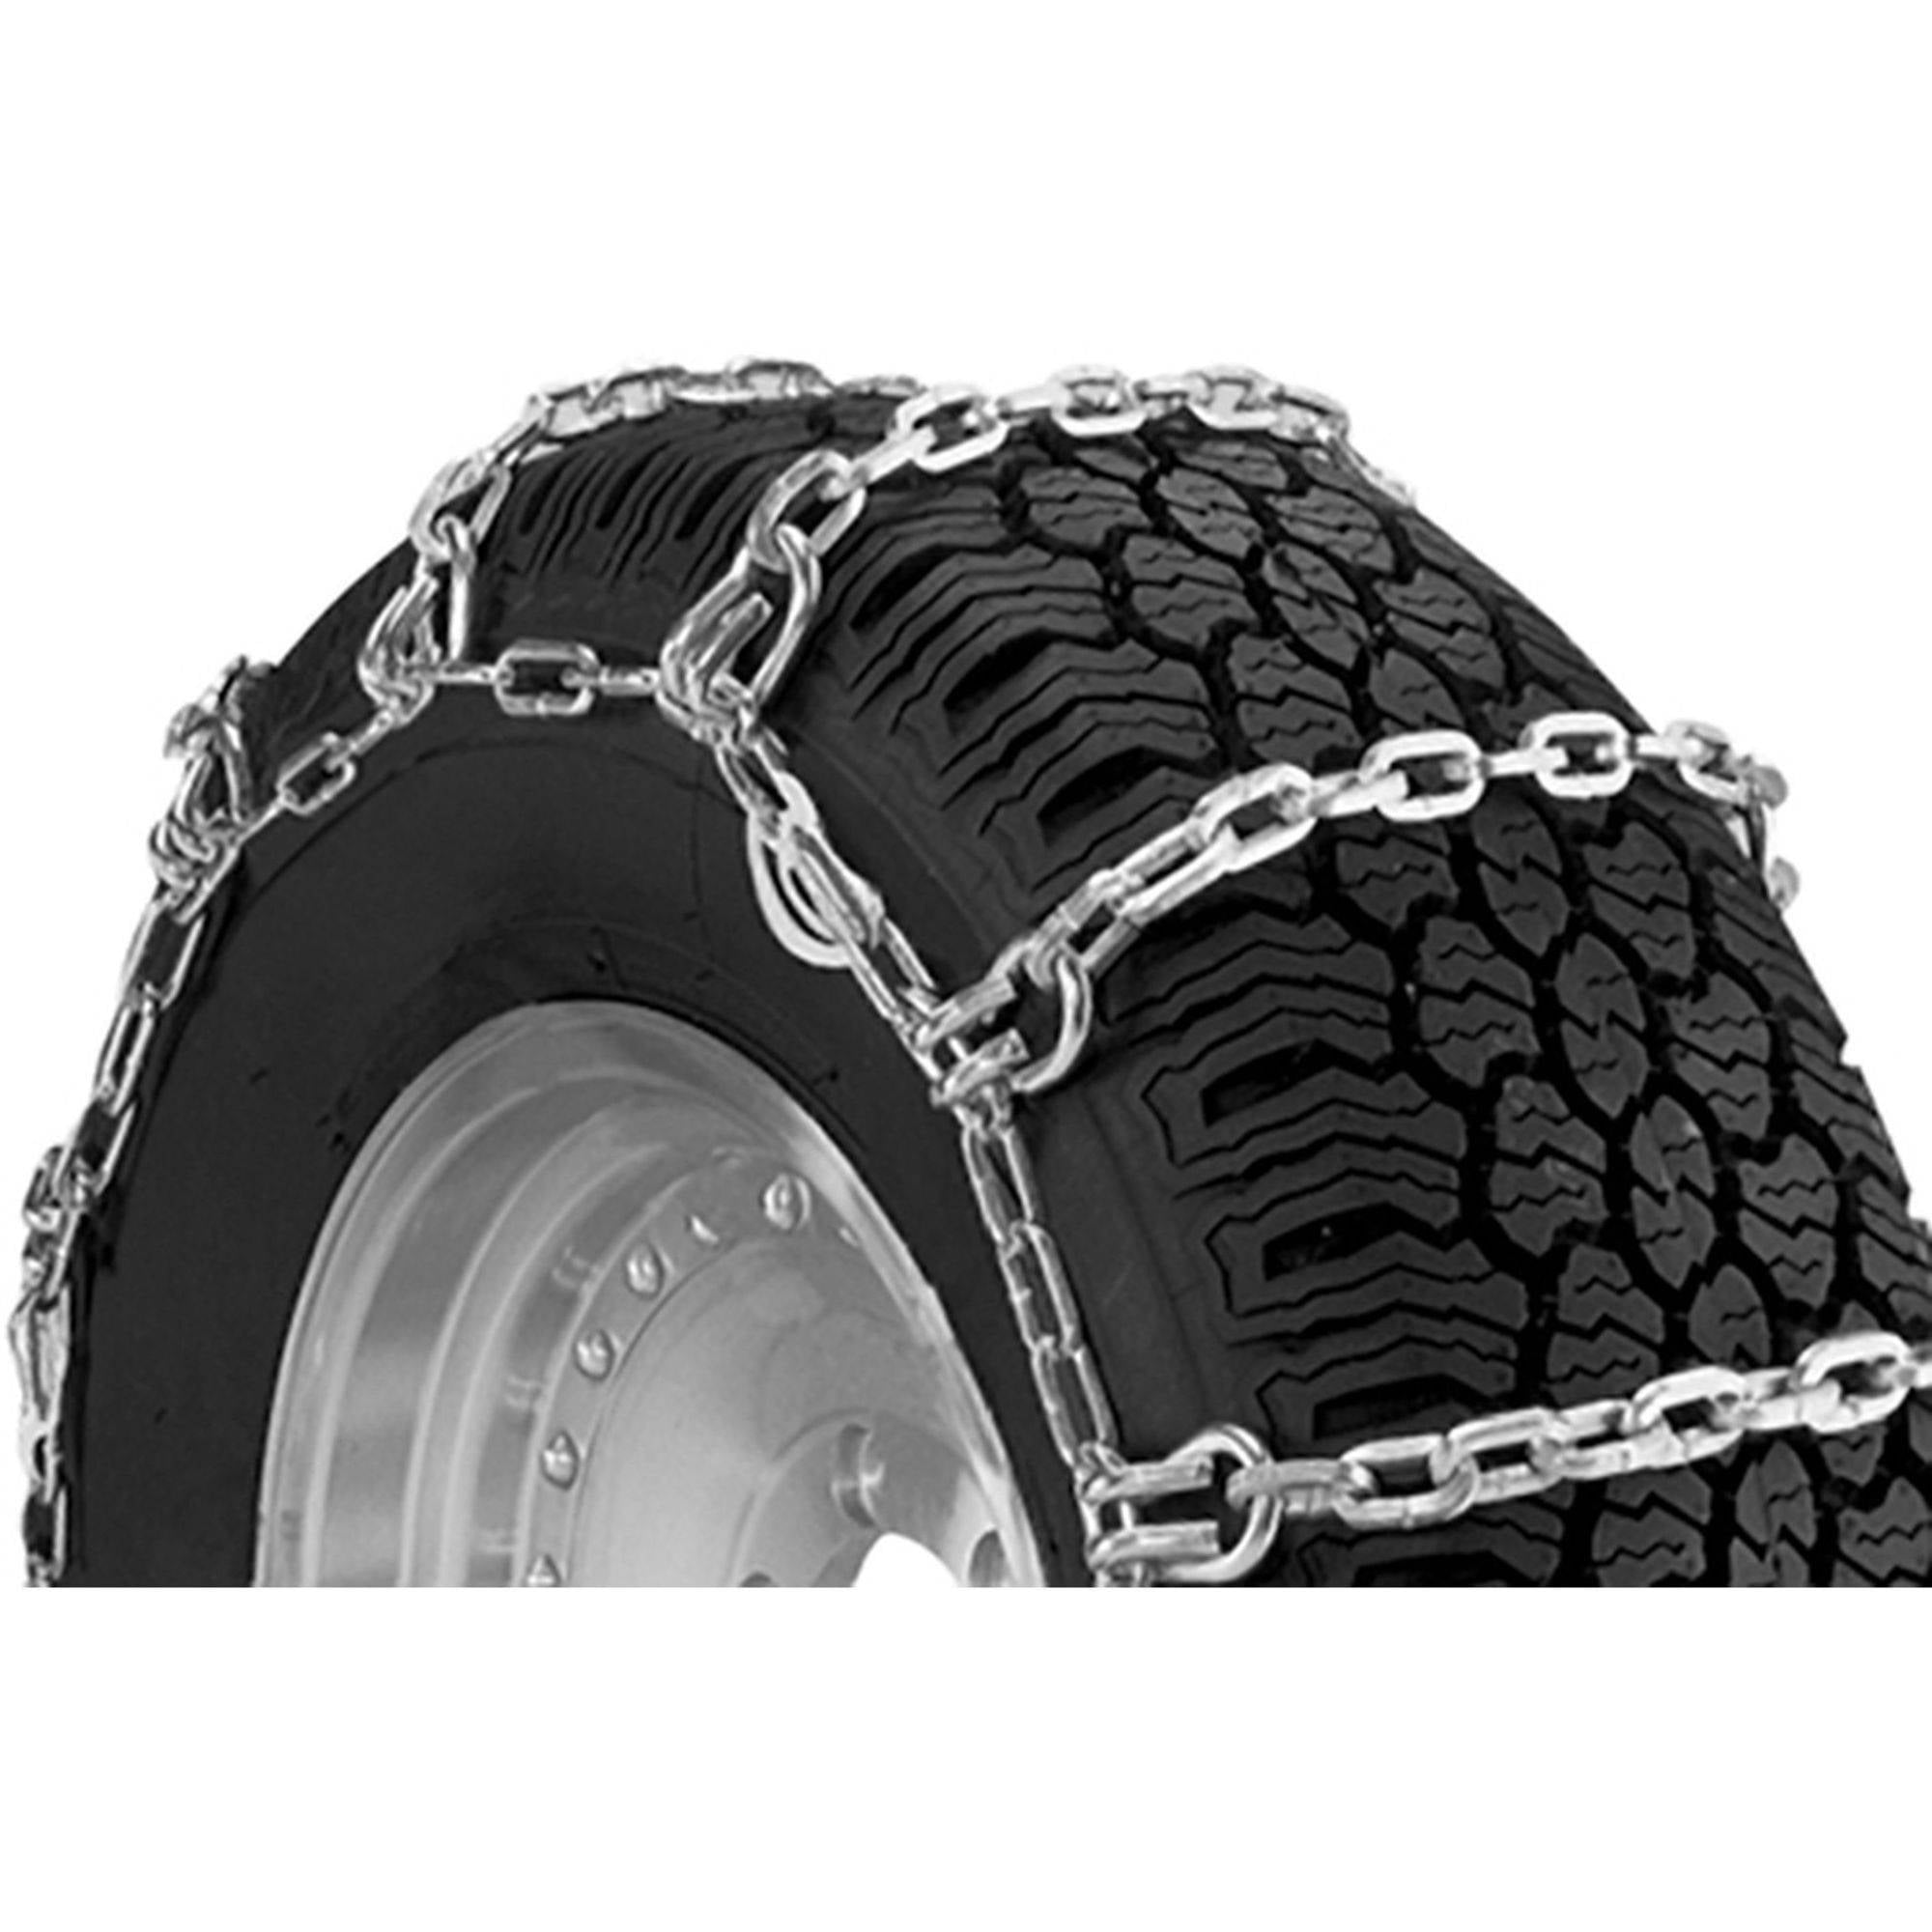 ATV-A Quality Chain 5.5mm Link V-Bar ATV UTV Snow Traction Tire Chains 